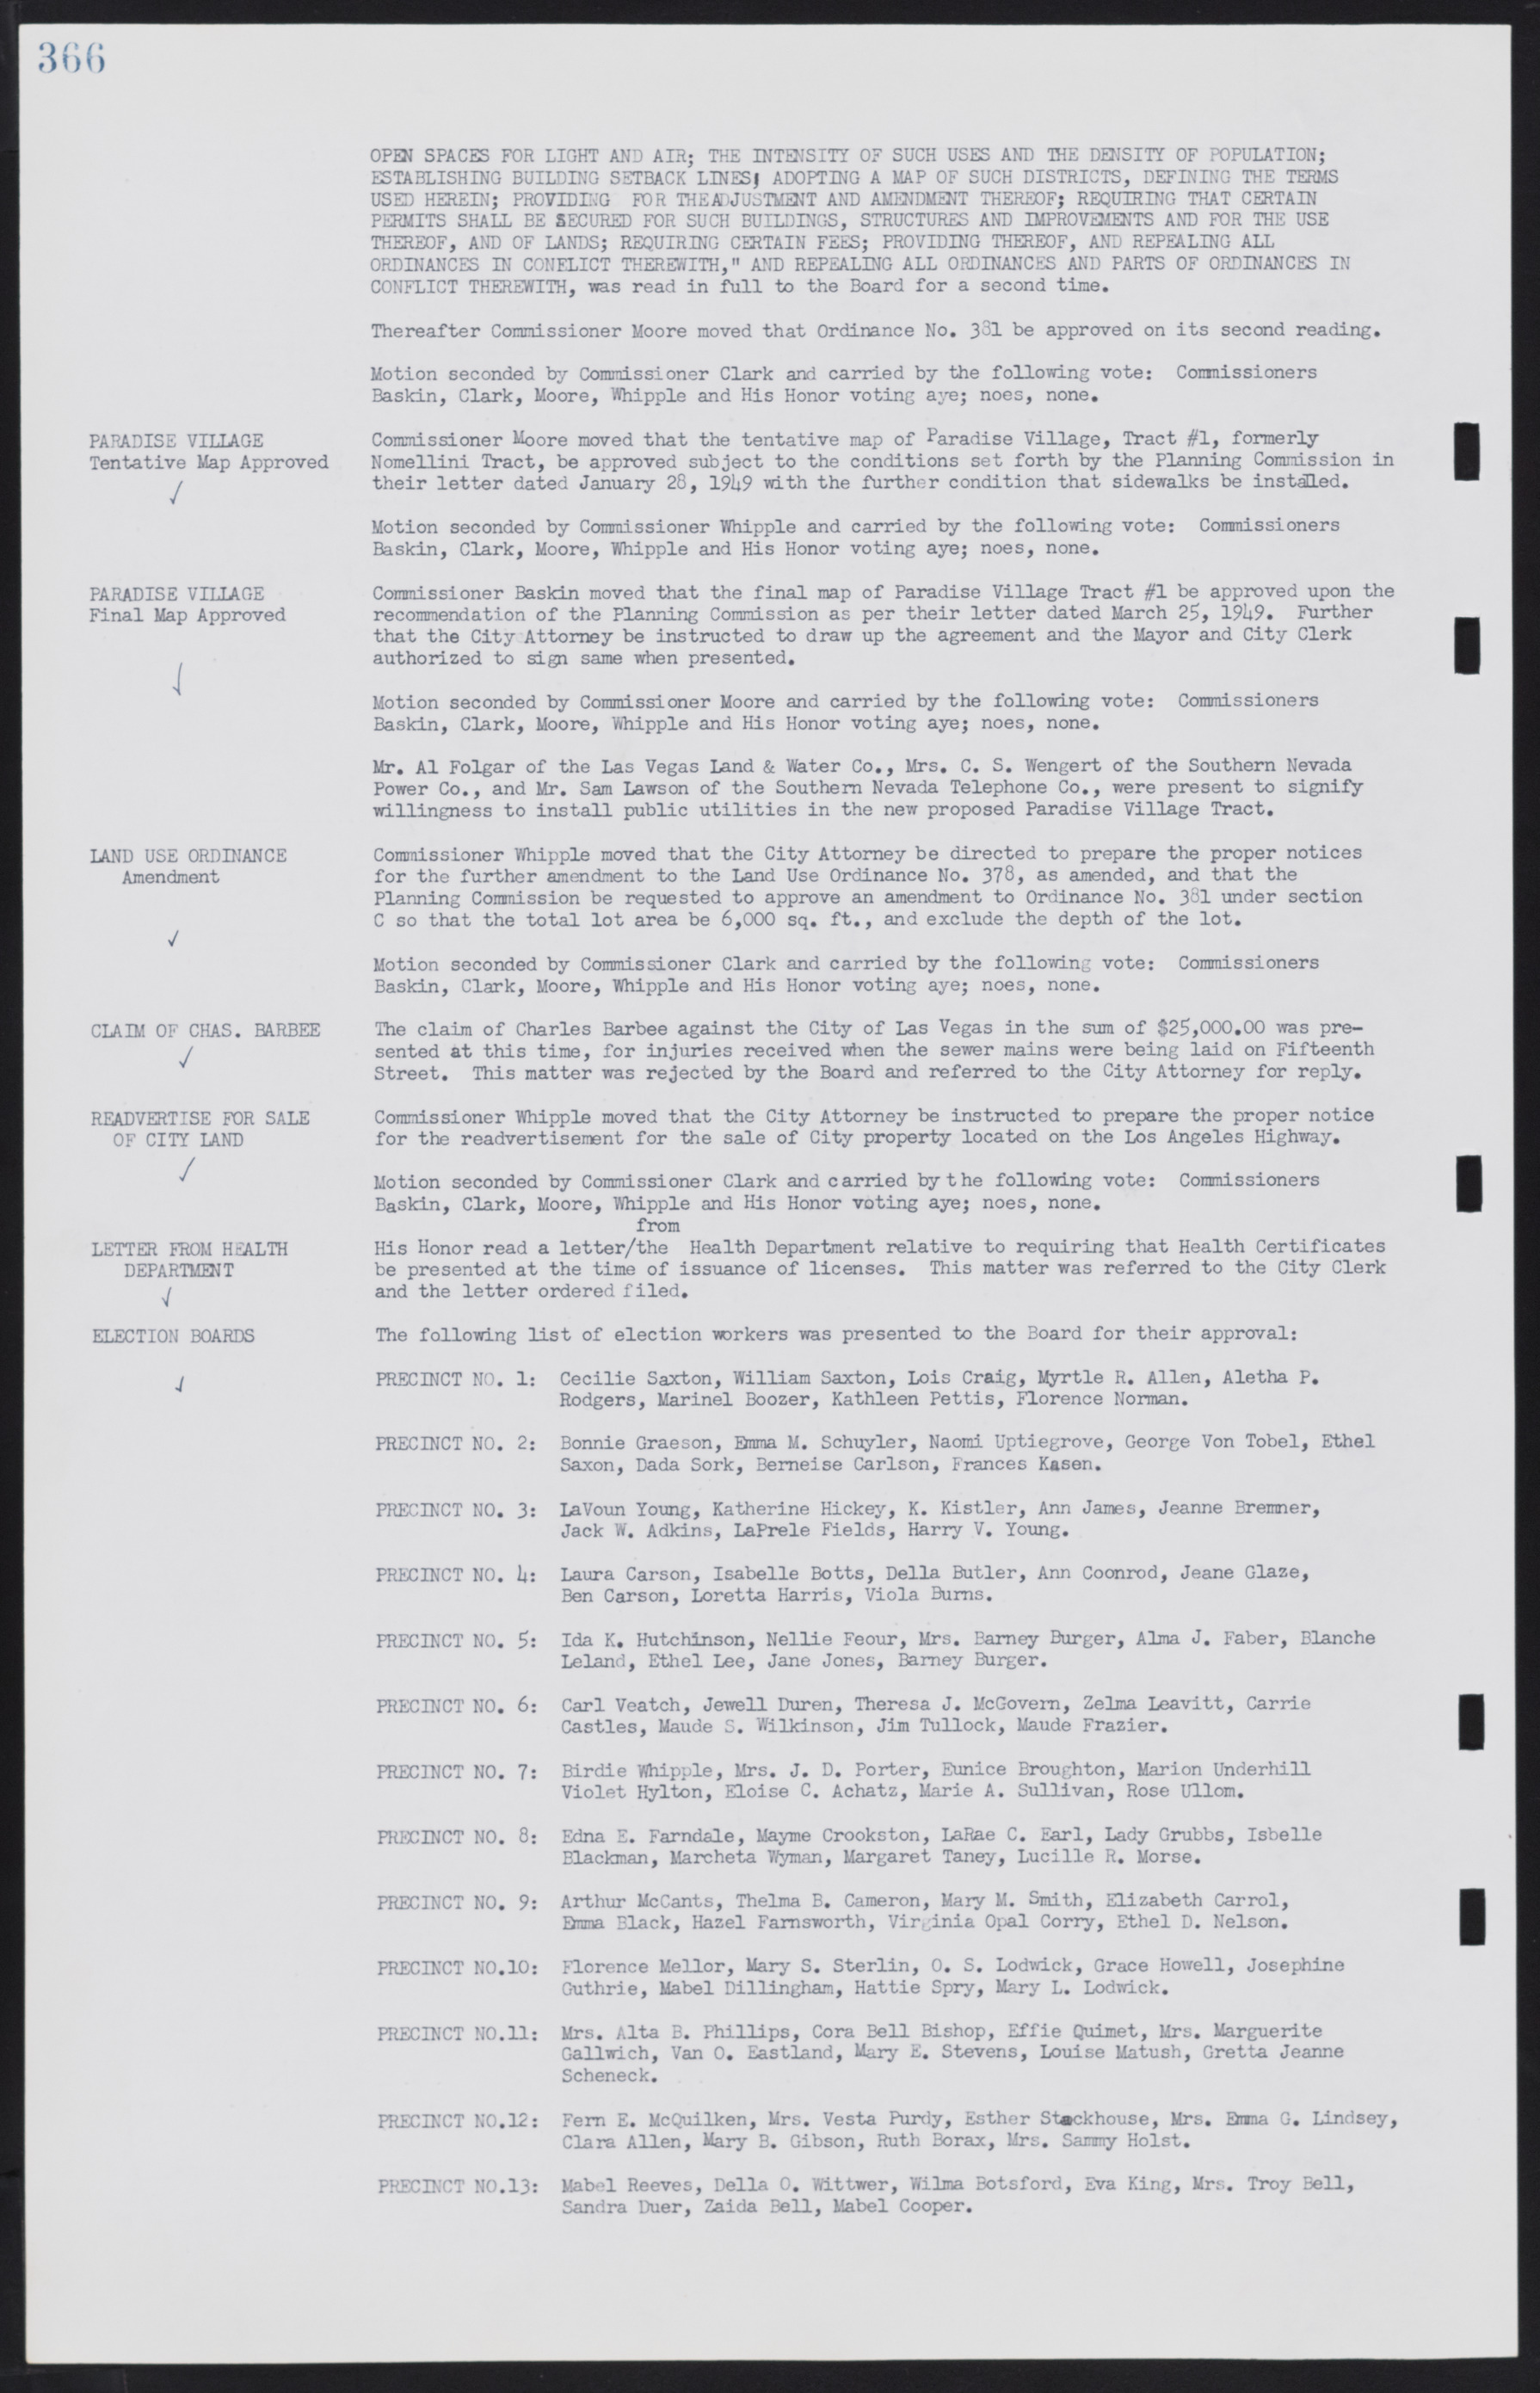 Las Vegas City Commission Minutes, January 7, 1947 to October 26, 1949, lvc000006-396